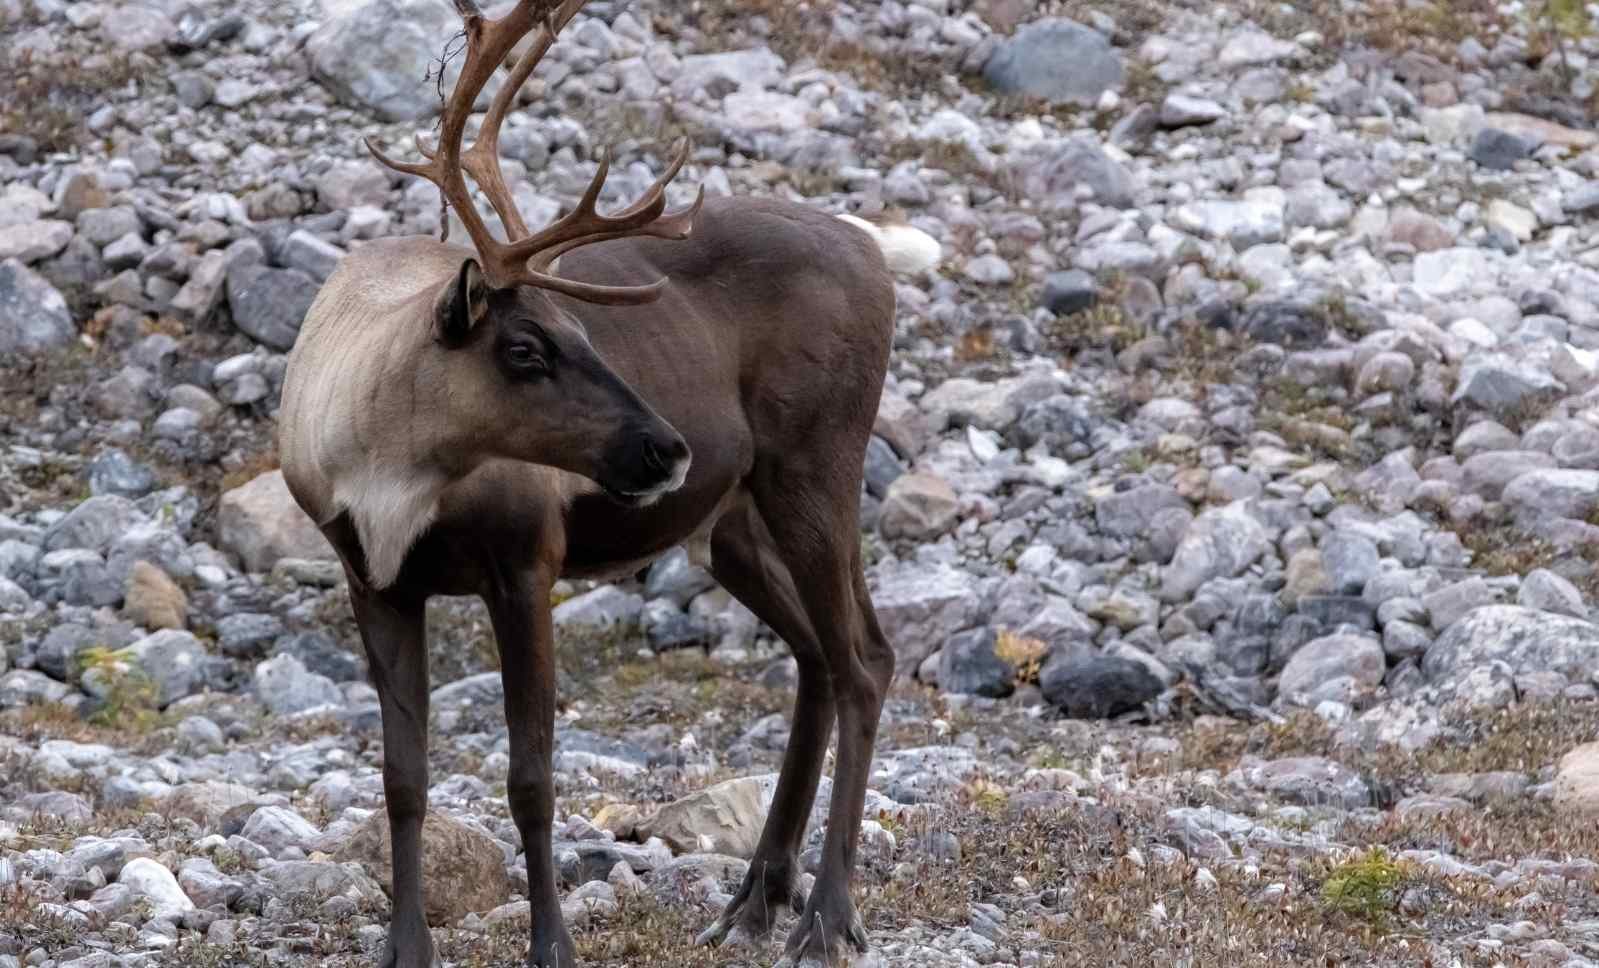 The Reindeer's Genders, Myths, and Personalities